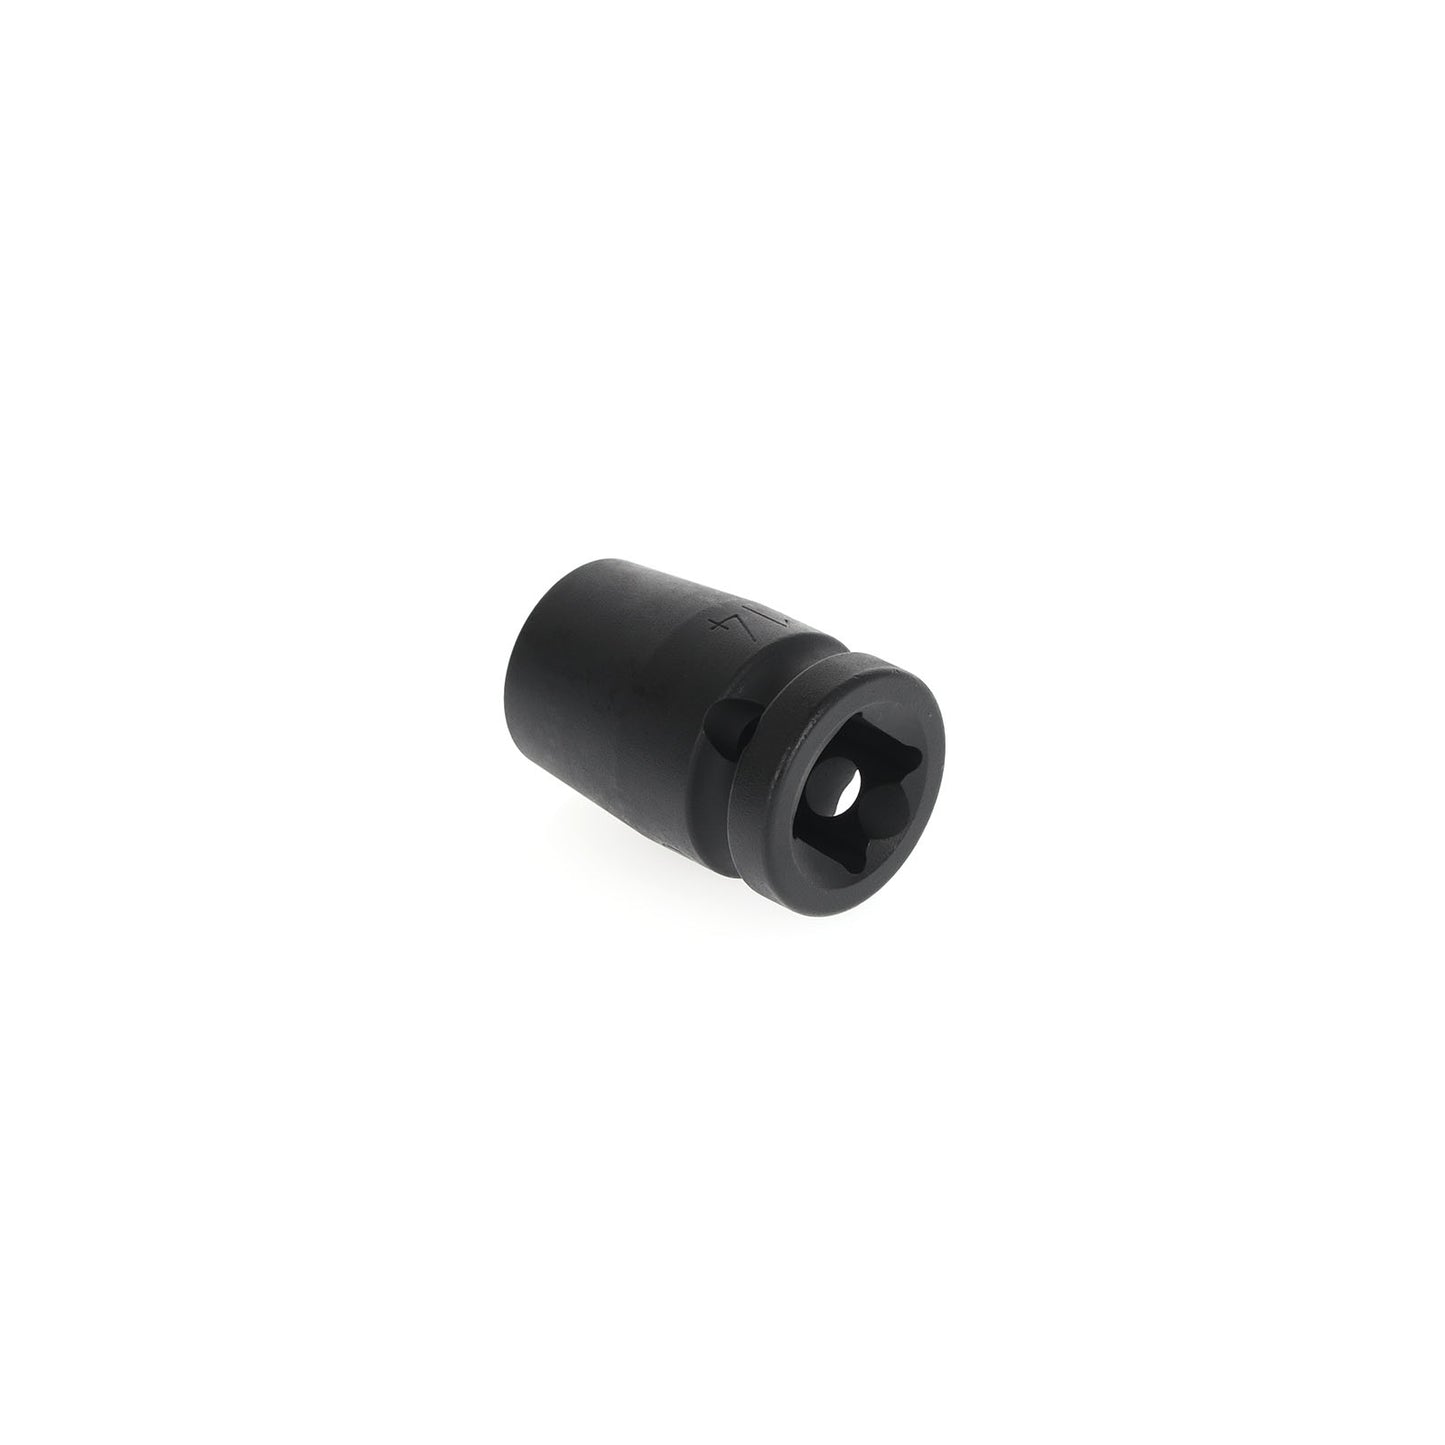 GEDORE K 19 14 - Hexagonal Impact Socket 1/2", 14 mm (6160600)